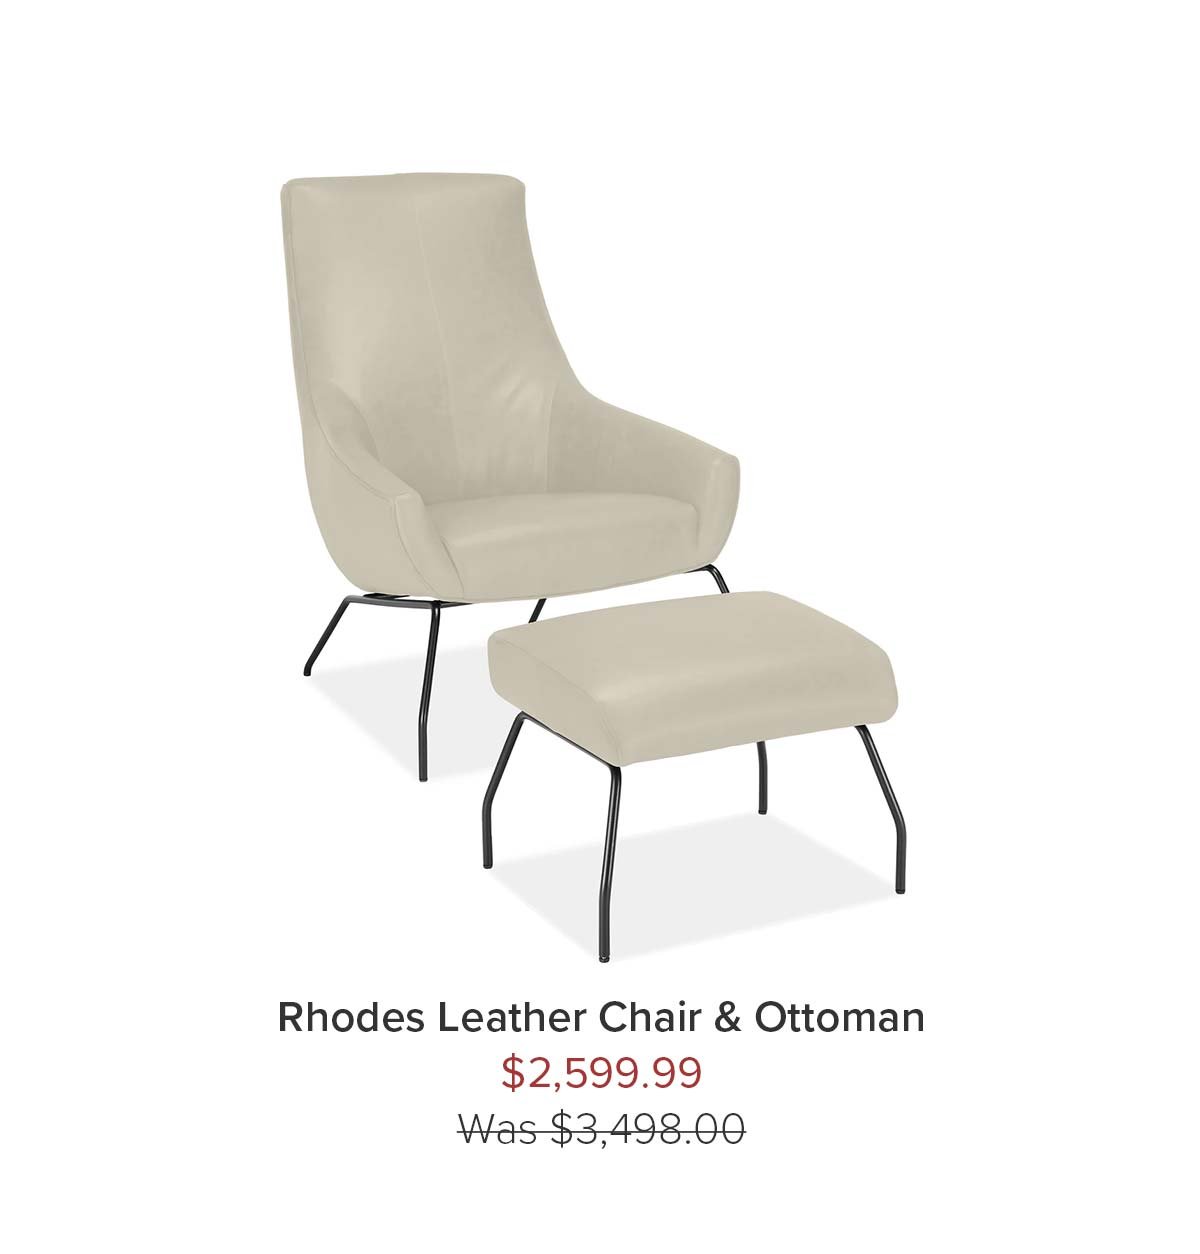 Rhodes Leather Chair & Ottoman - \\$2,599.99